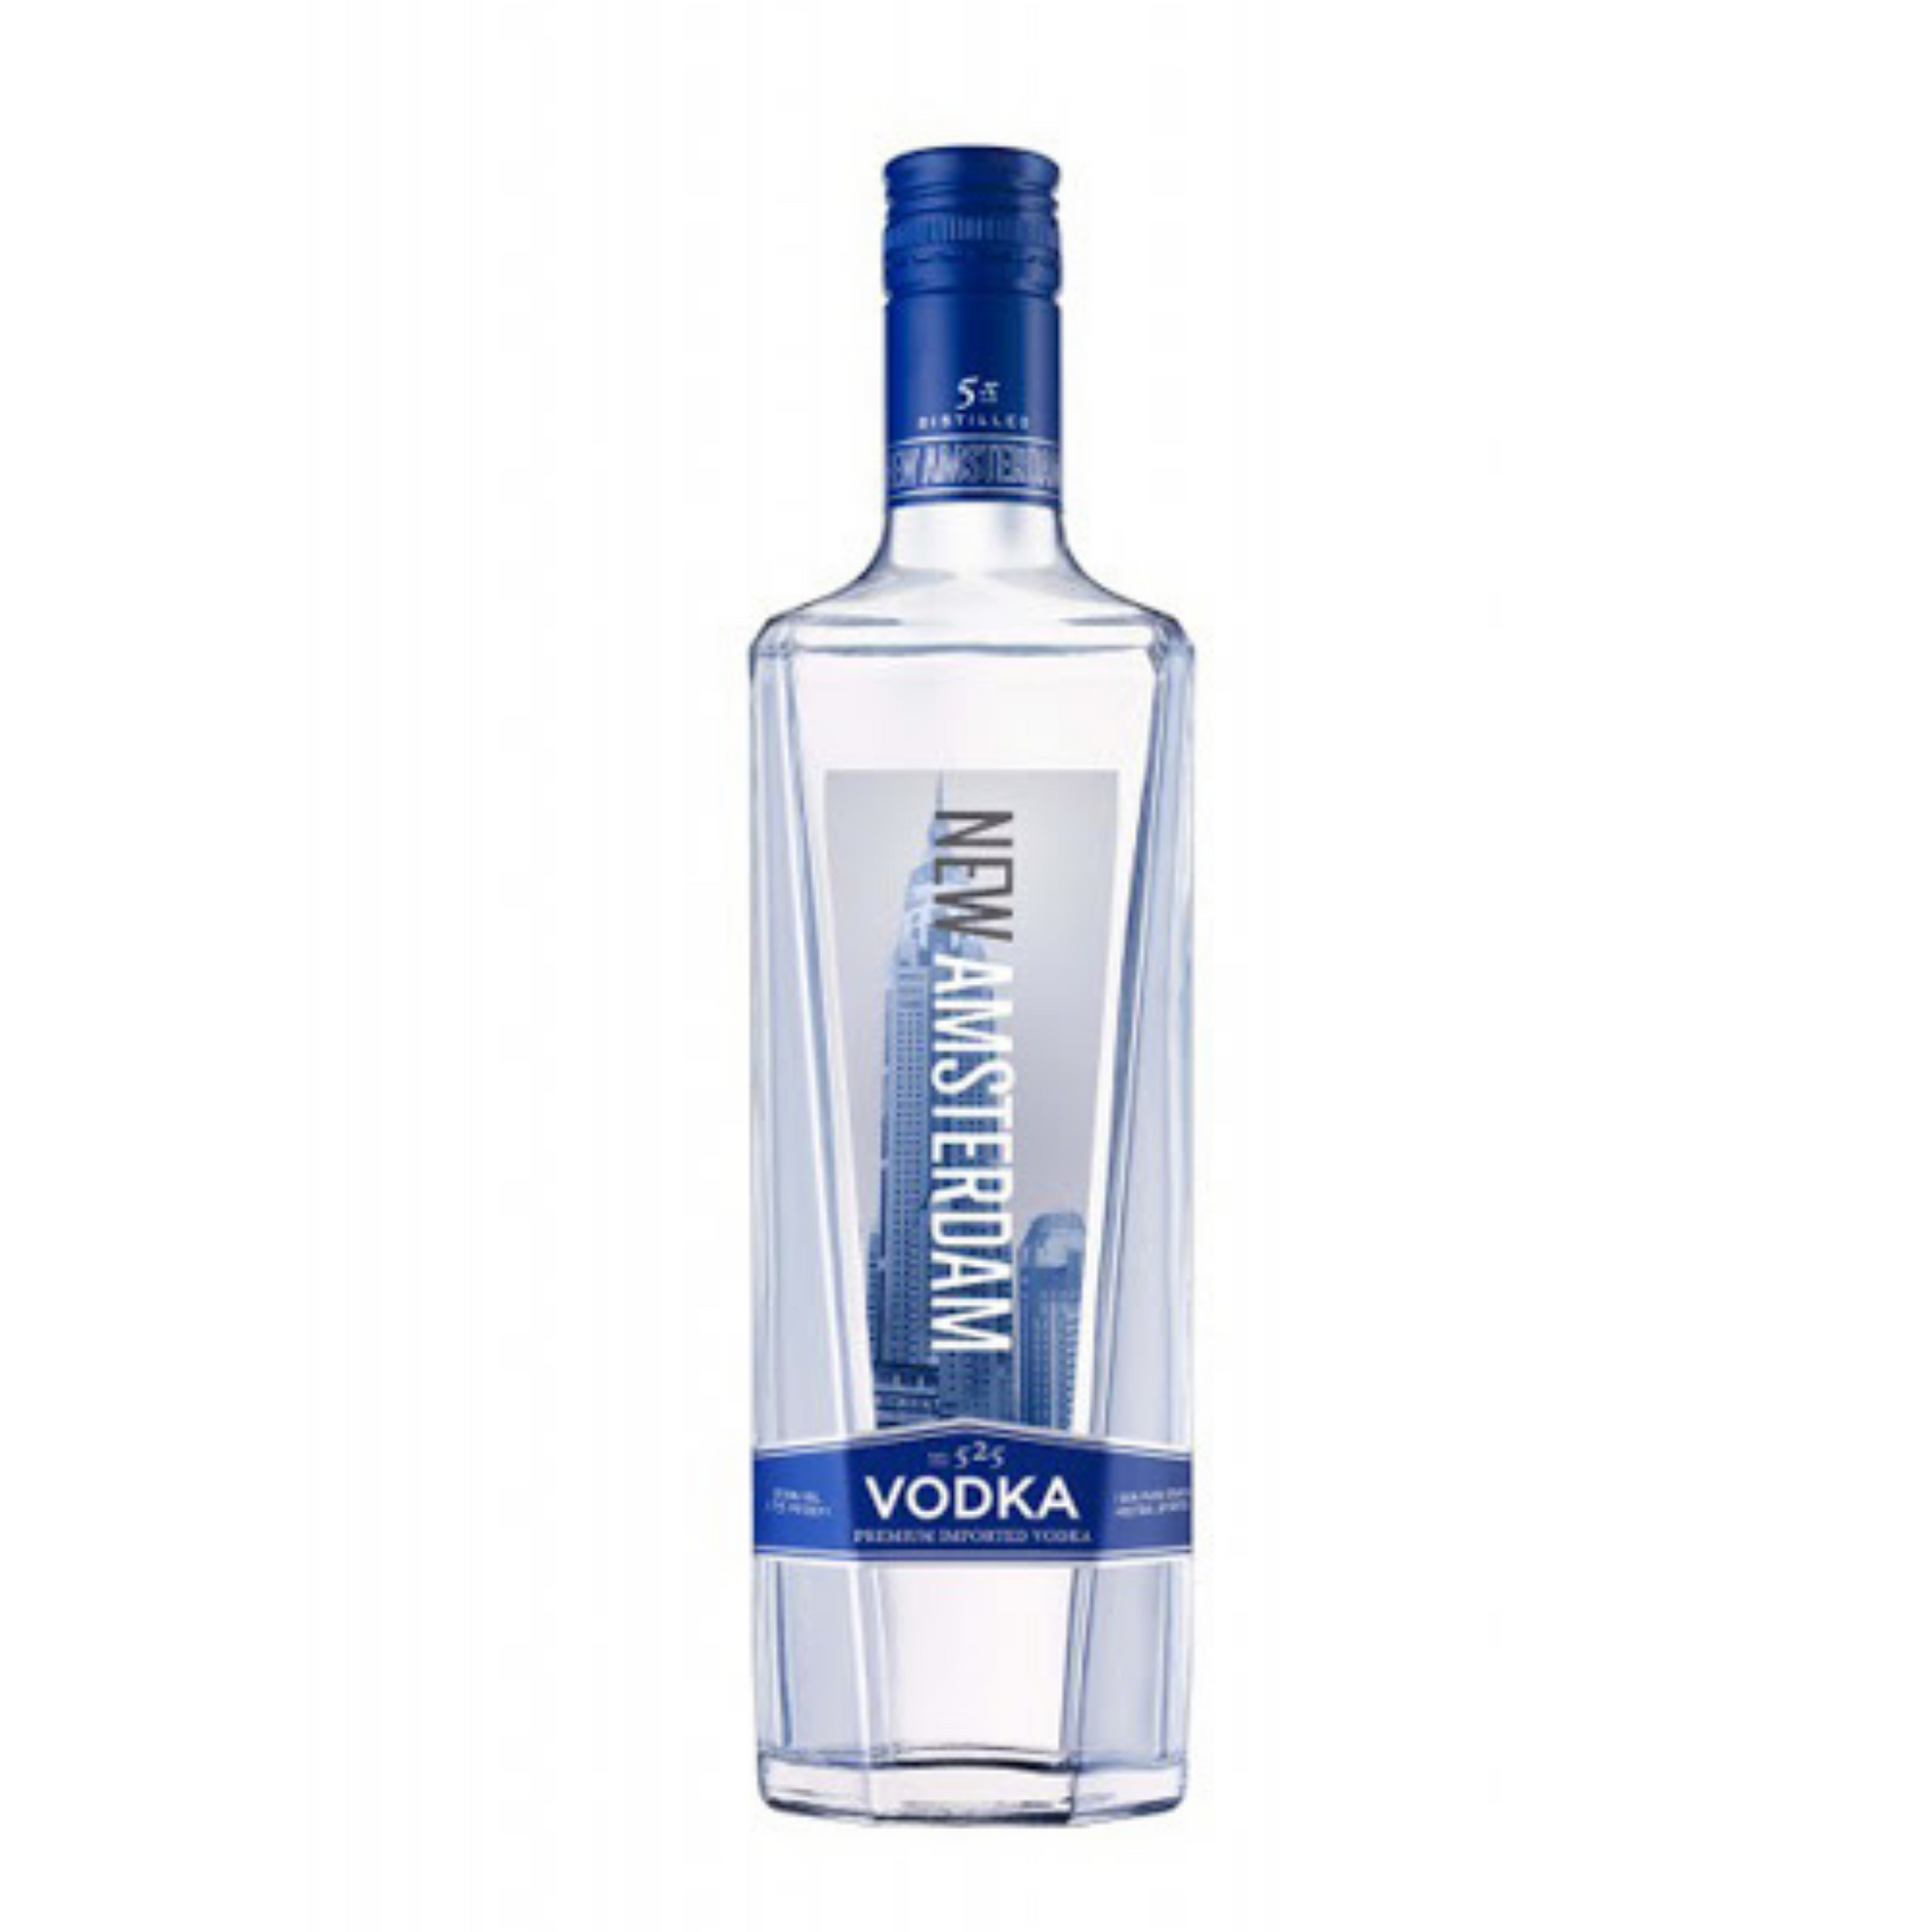 New Amsterdam Vodka, 1L